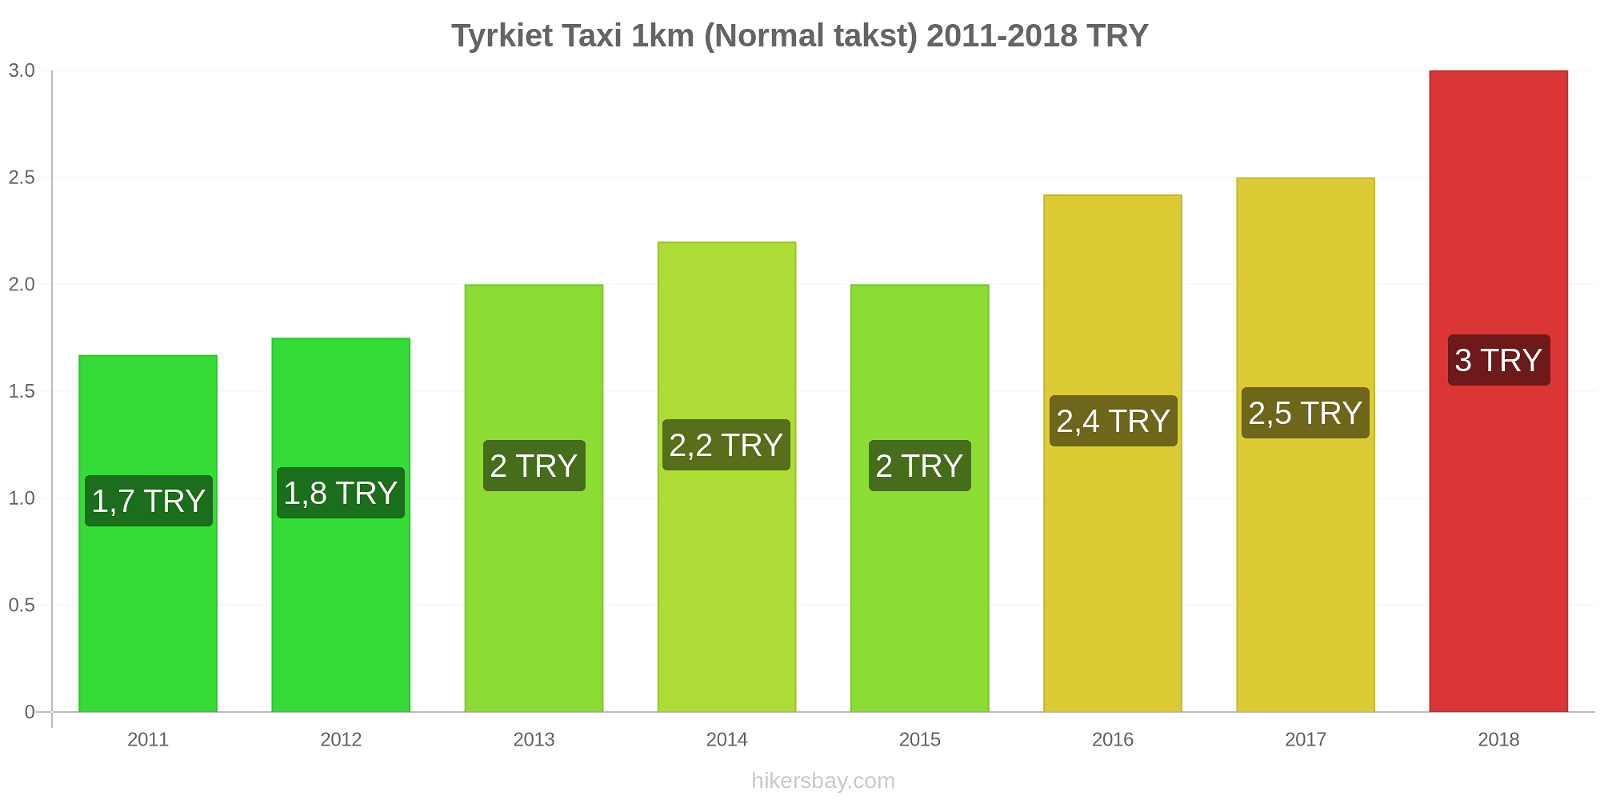 Tyrkiet prisændringer Taxi 1km (normal takst) hikersbay.com